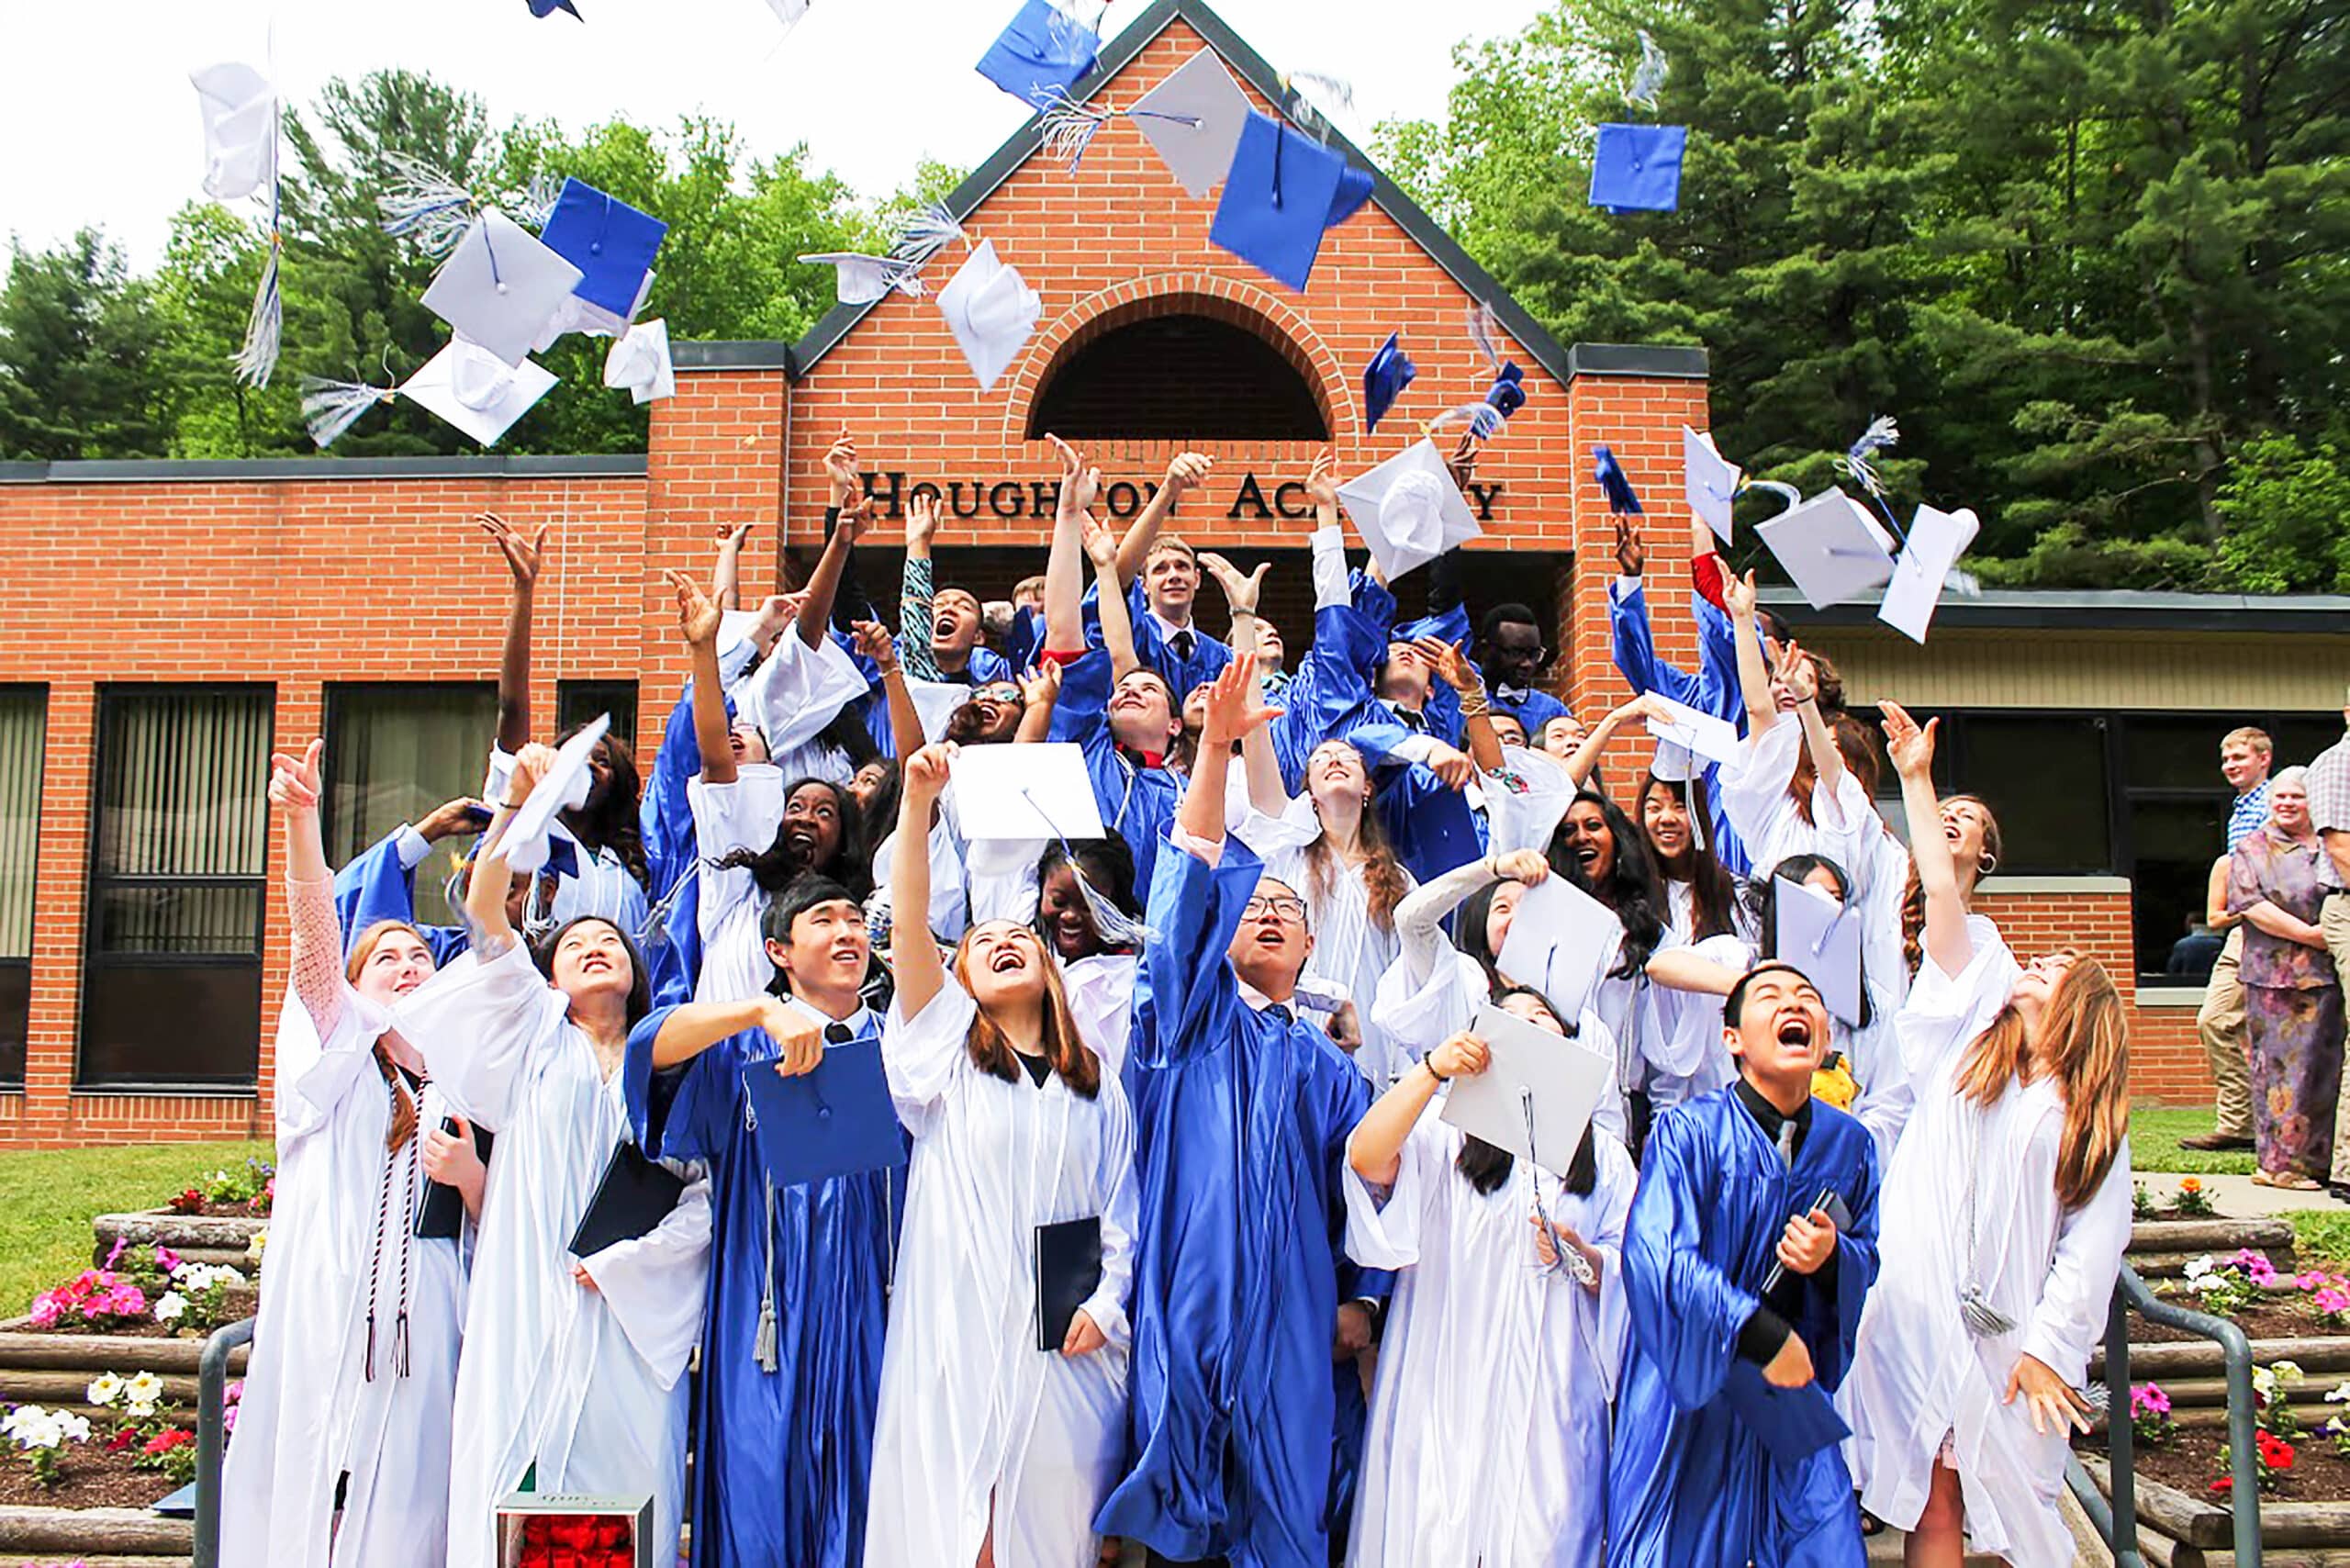 Houghton School Graduation Ceremony - Students